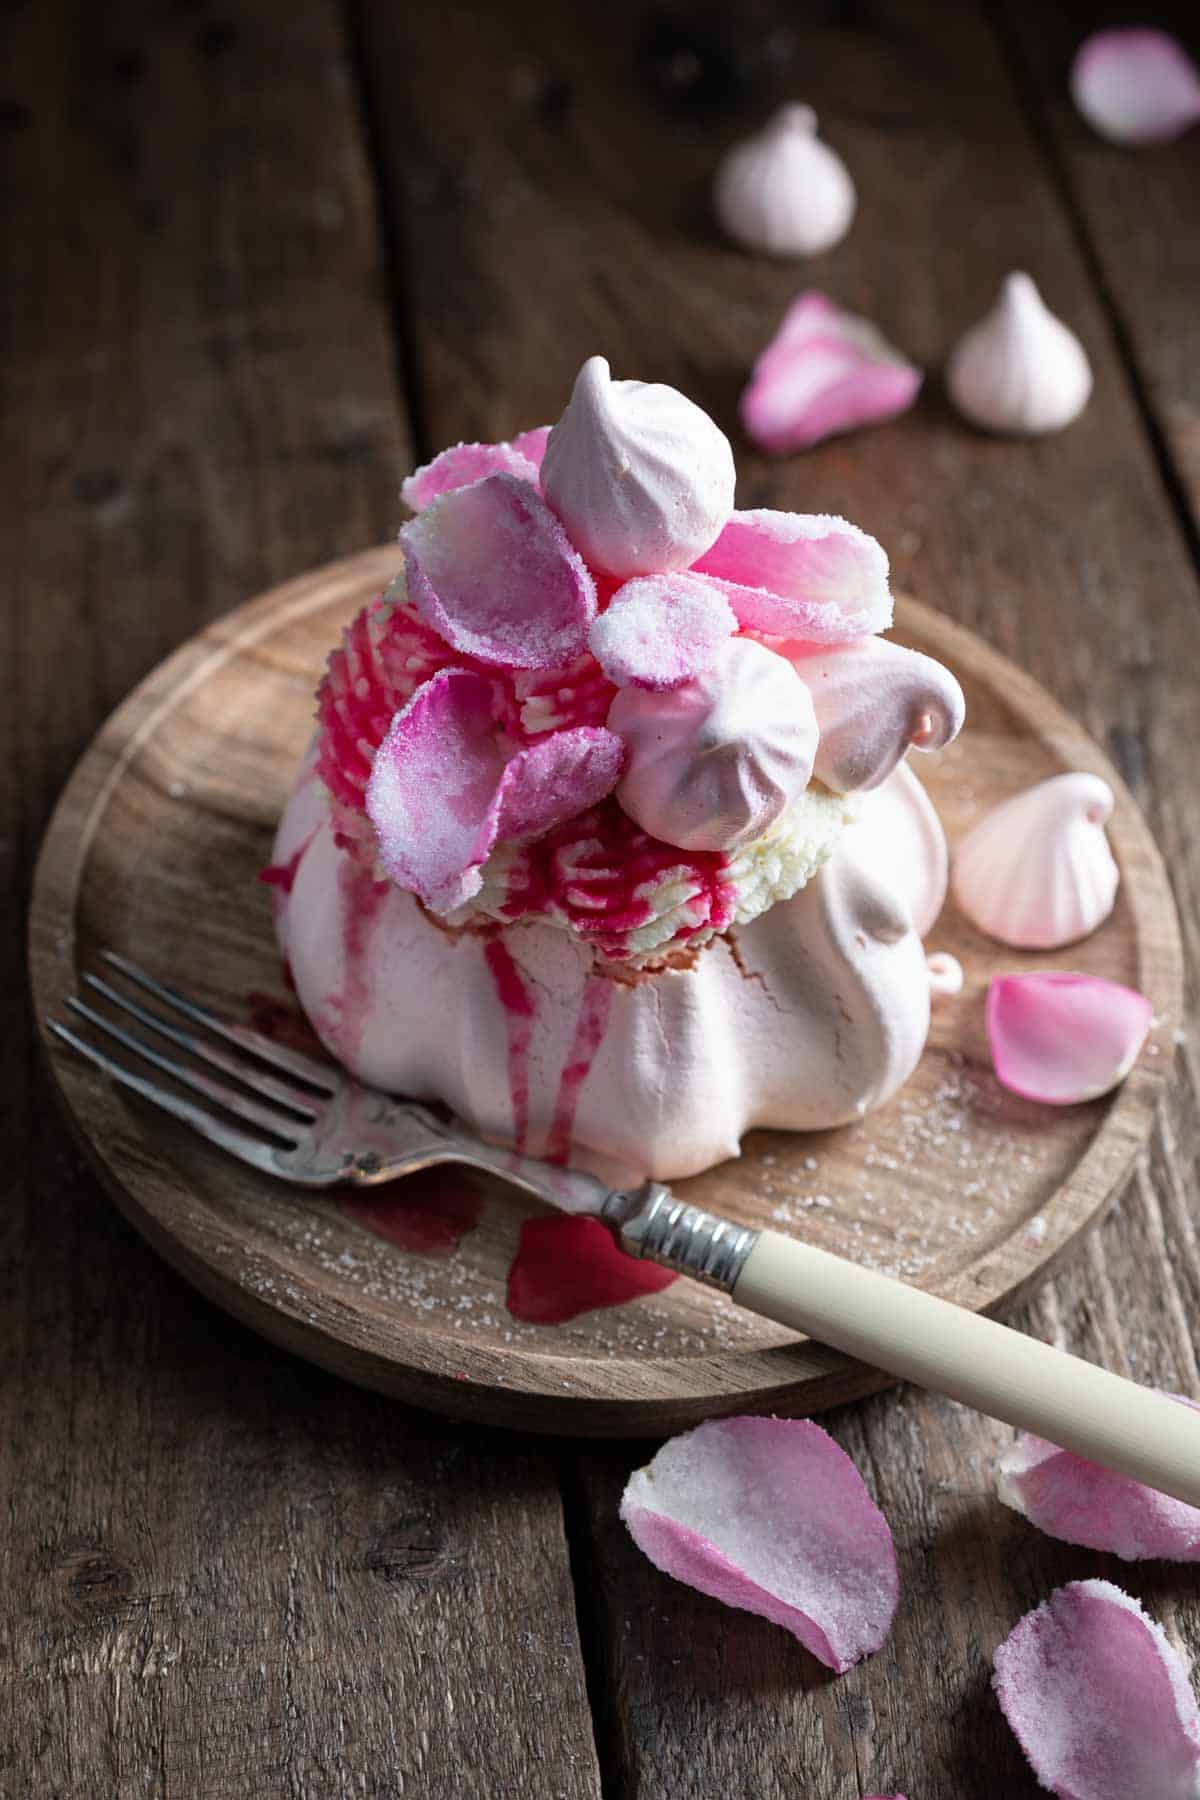 One mini rose pavlova served on a plate 